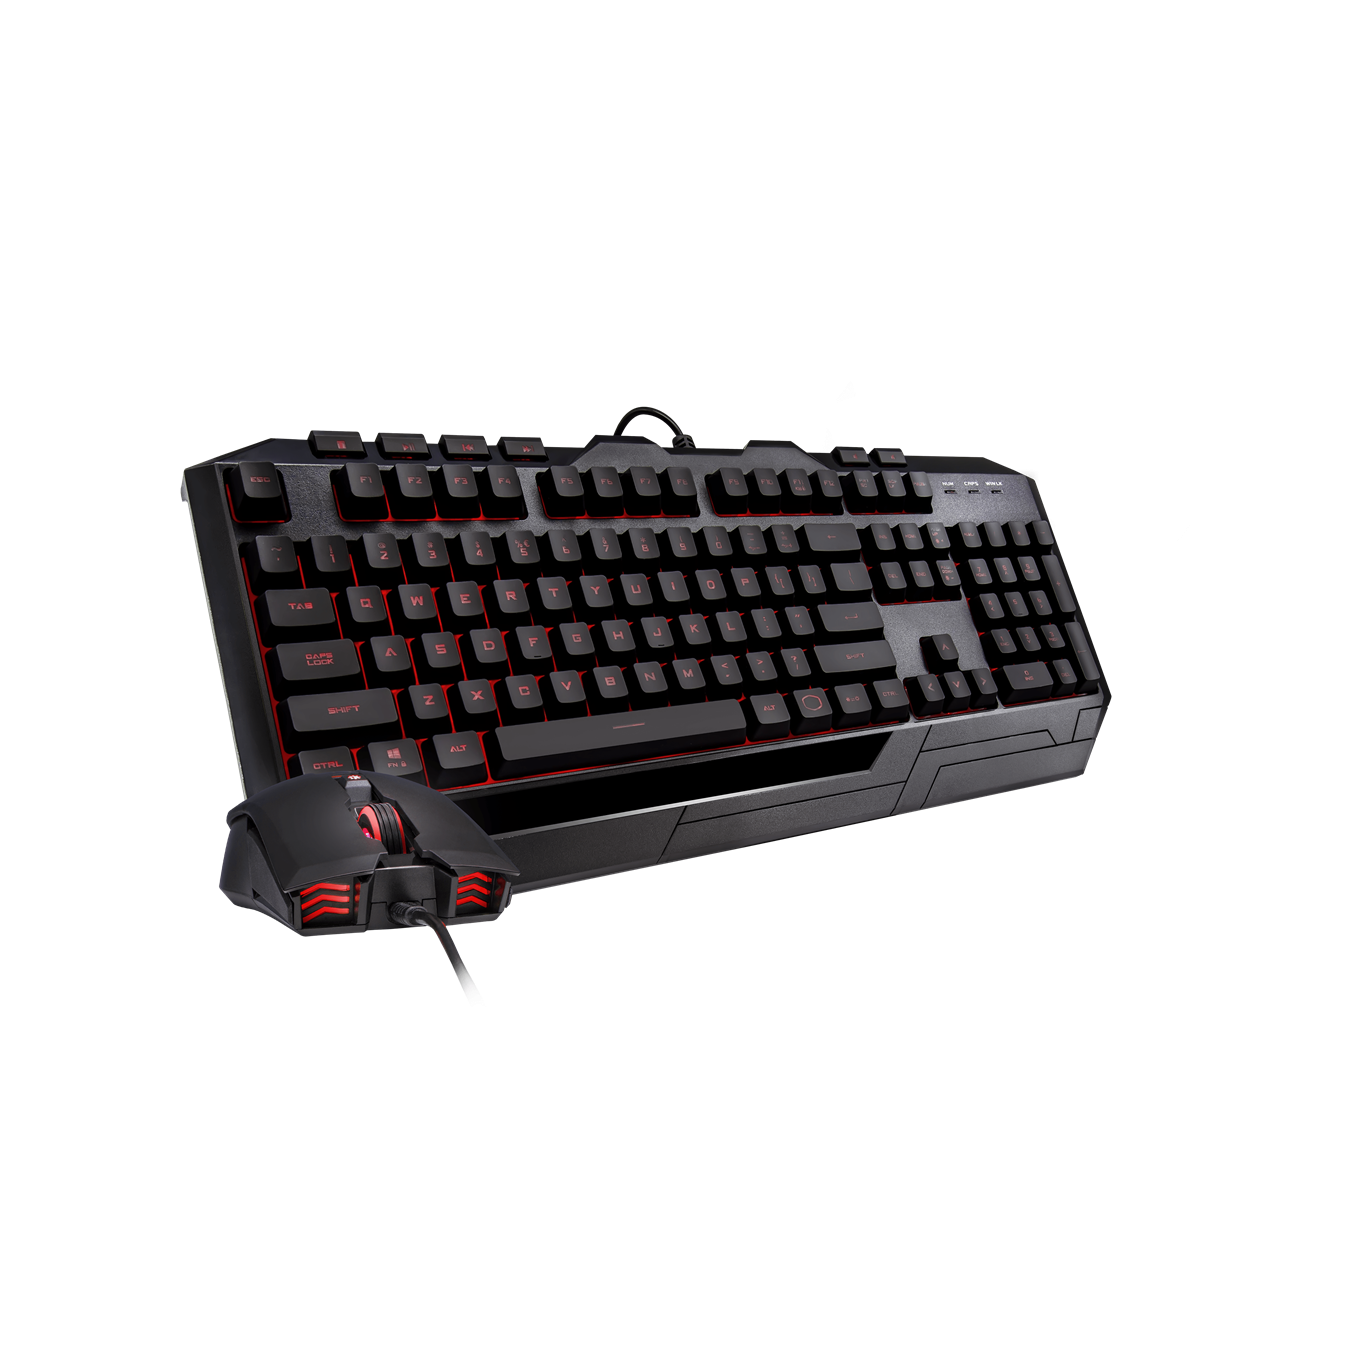 Devastator 3 Plus - keyboard with red backlight